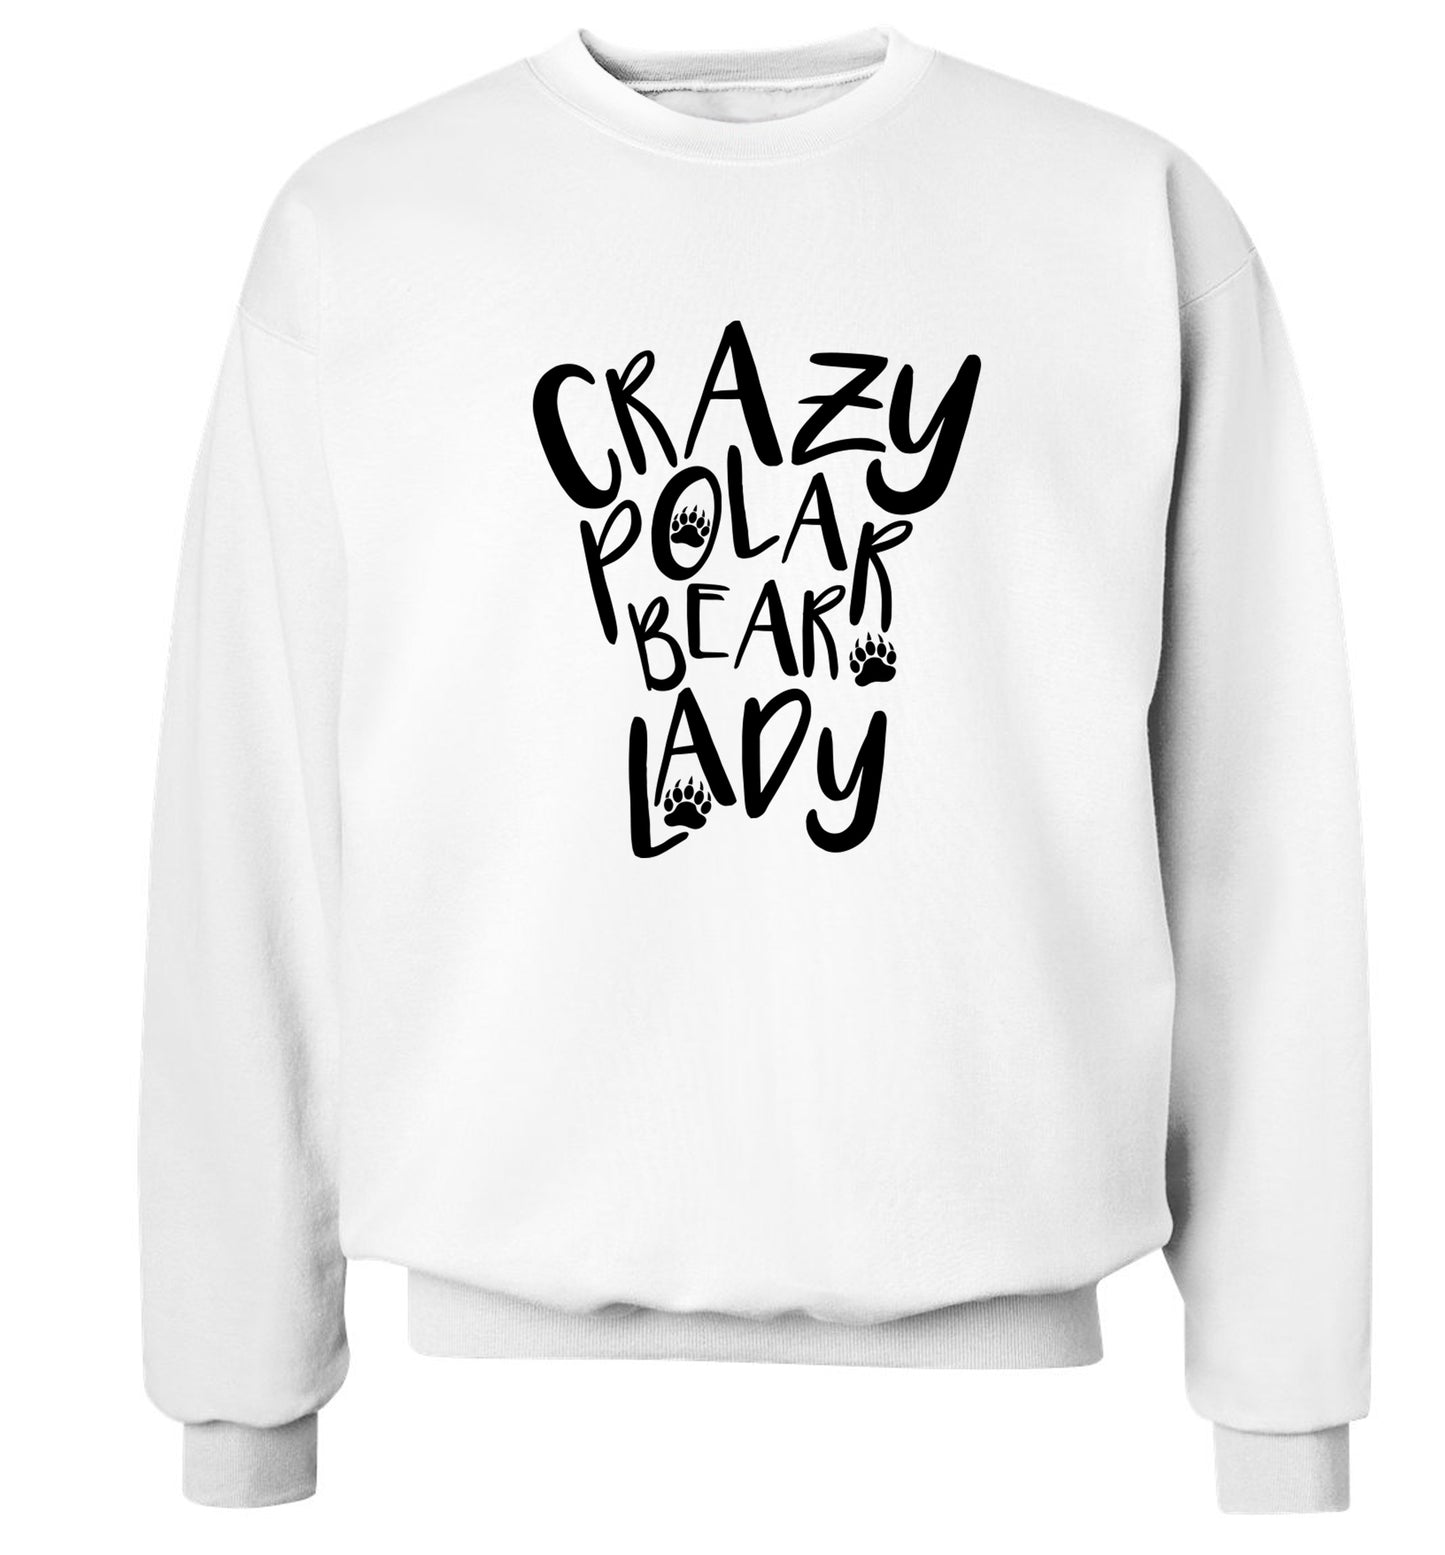 Crazy polar bear lady Adult's unisex white Sweater 2XL